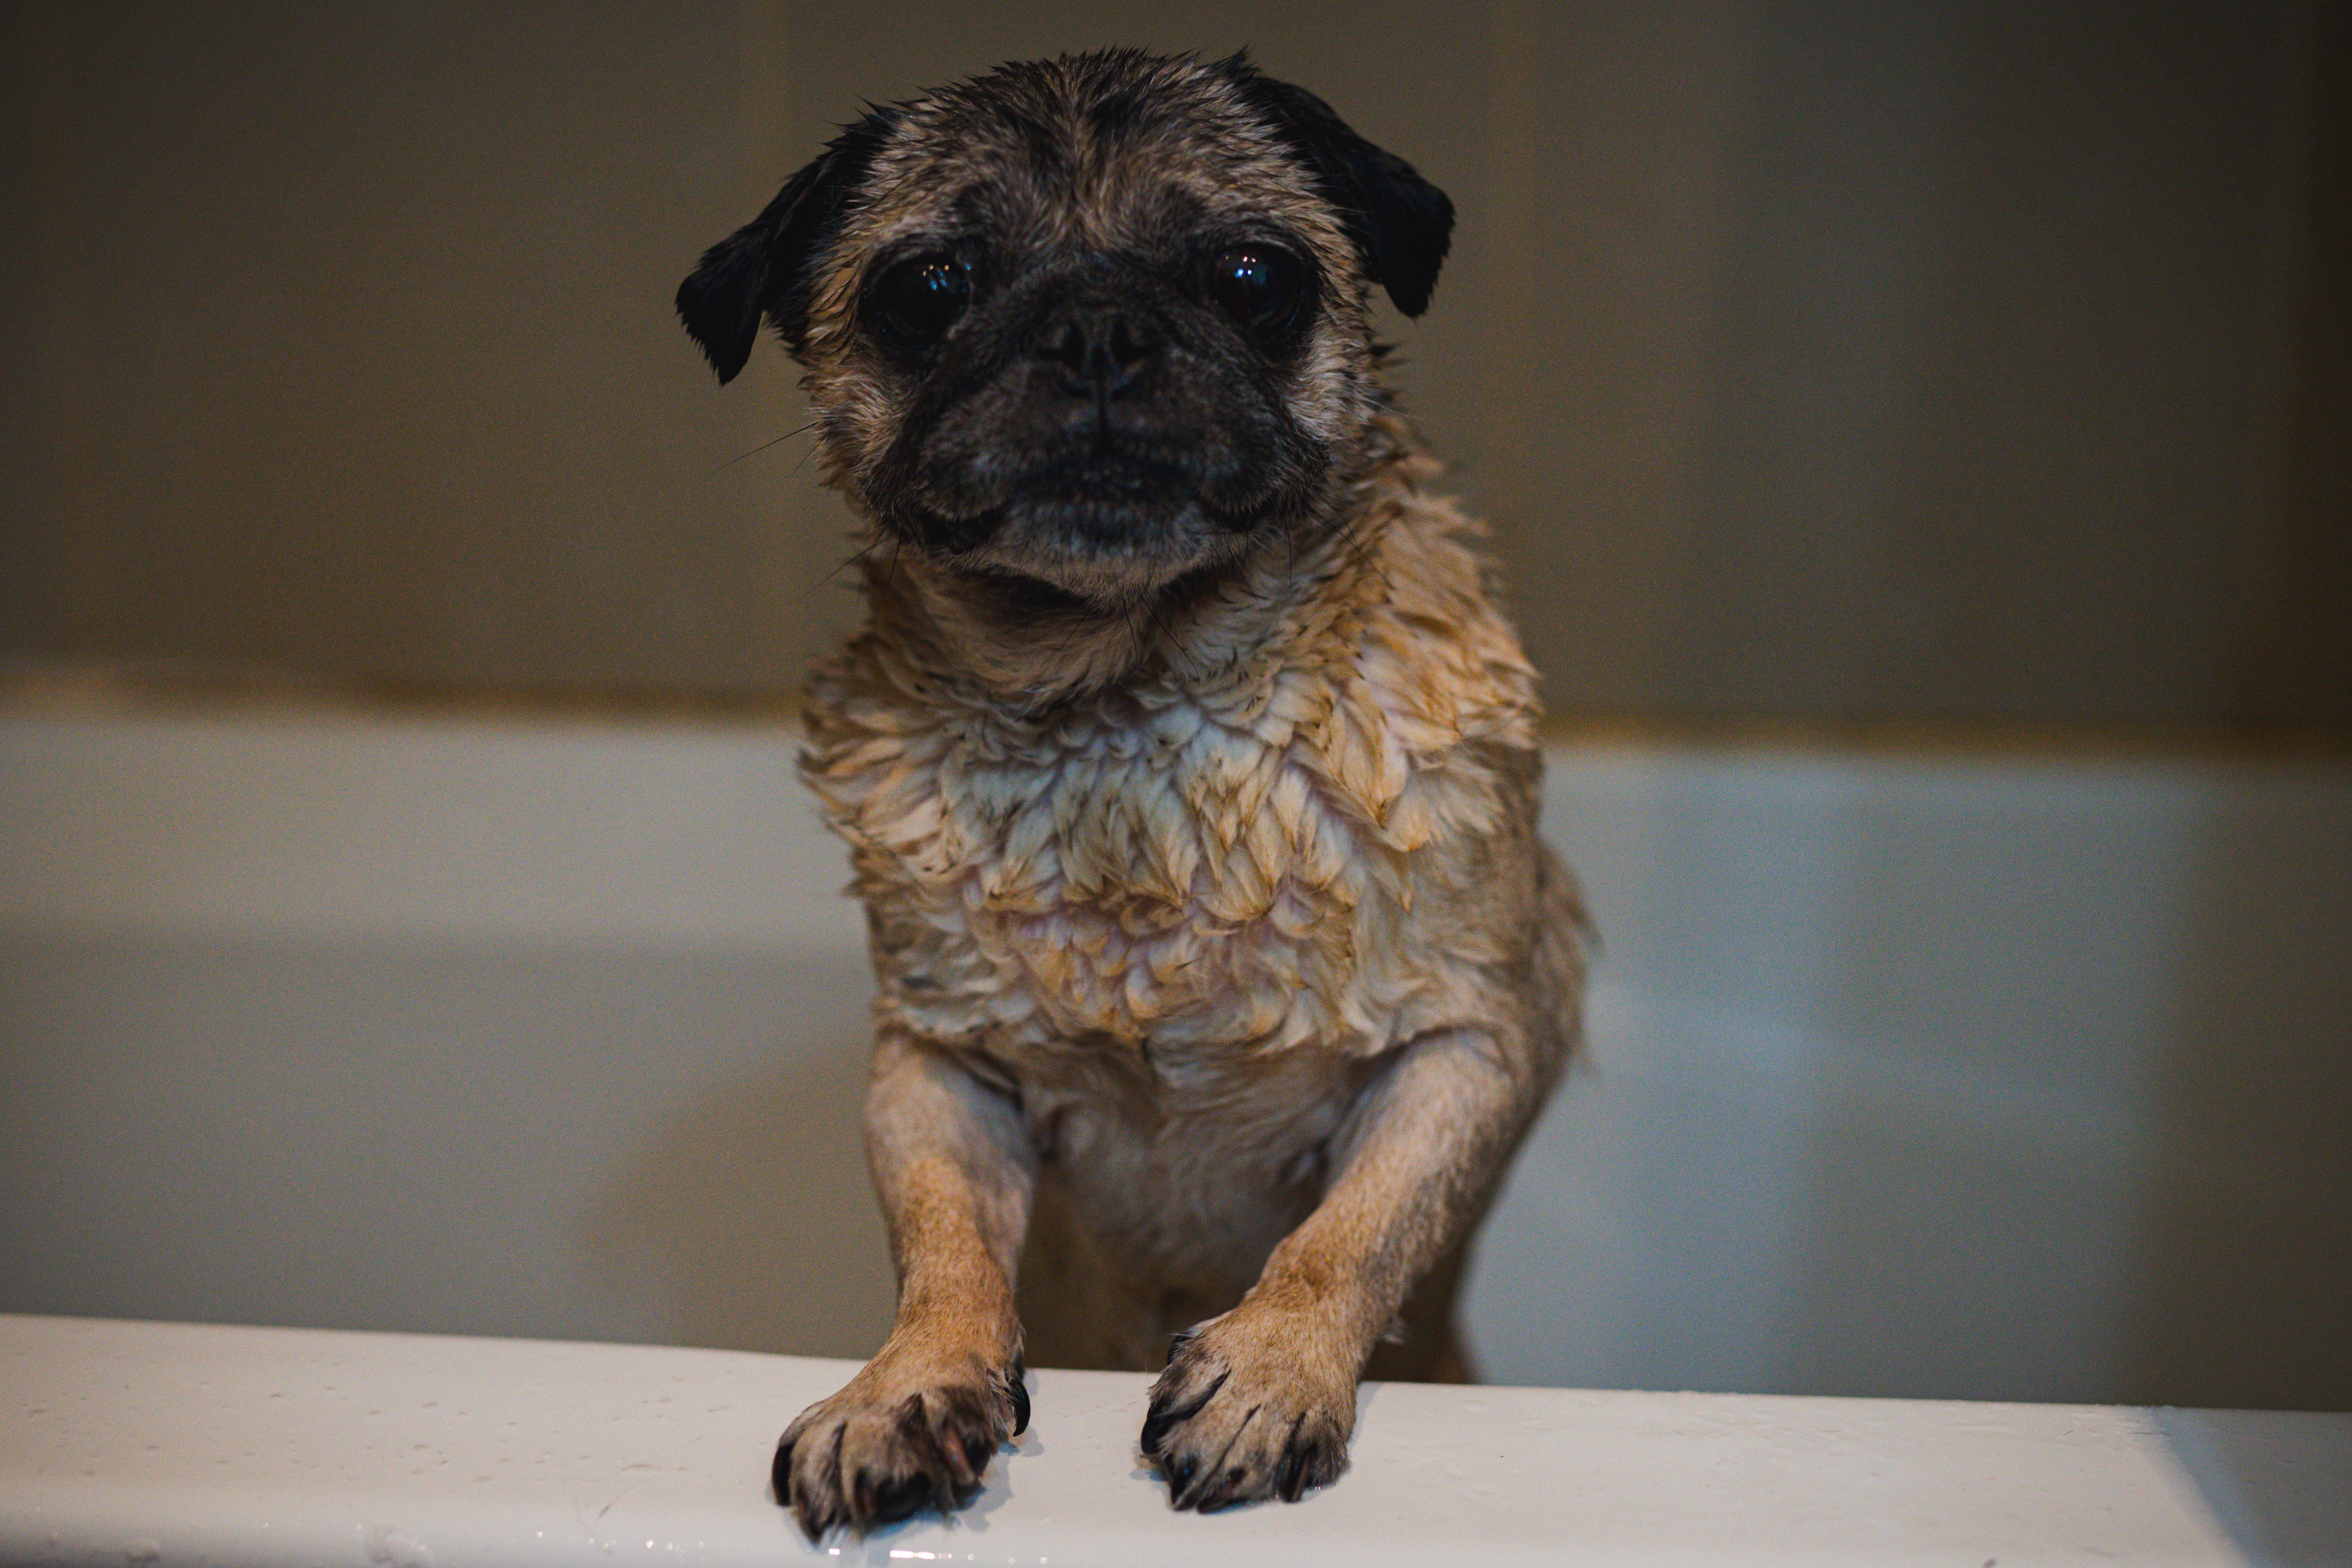 Soapy pug looks beseechingly at camera